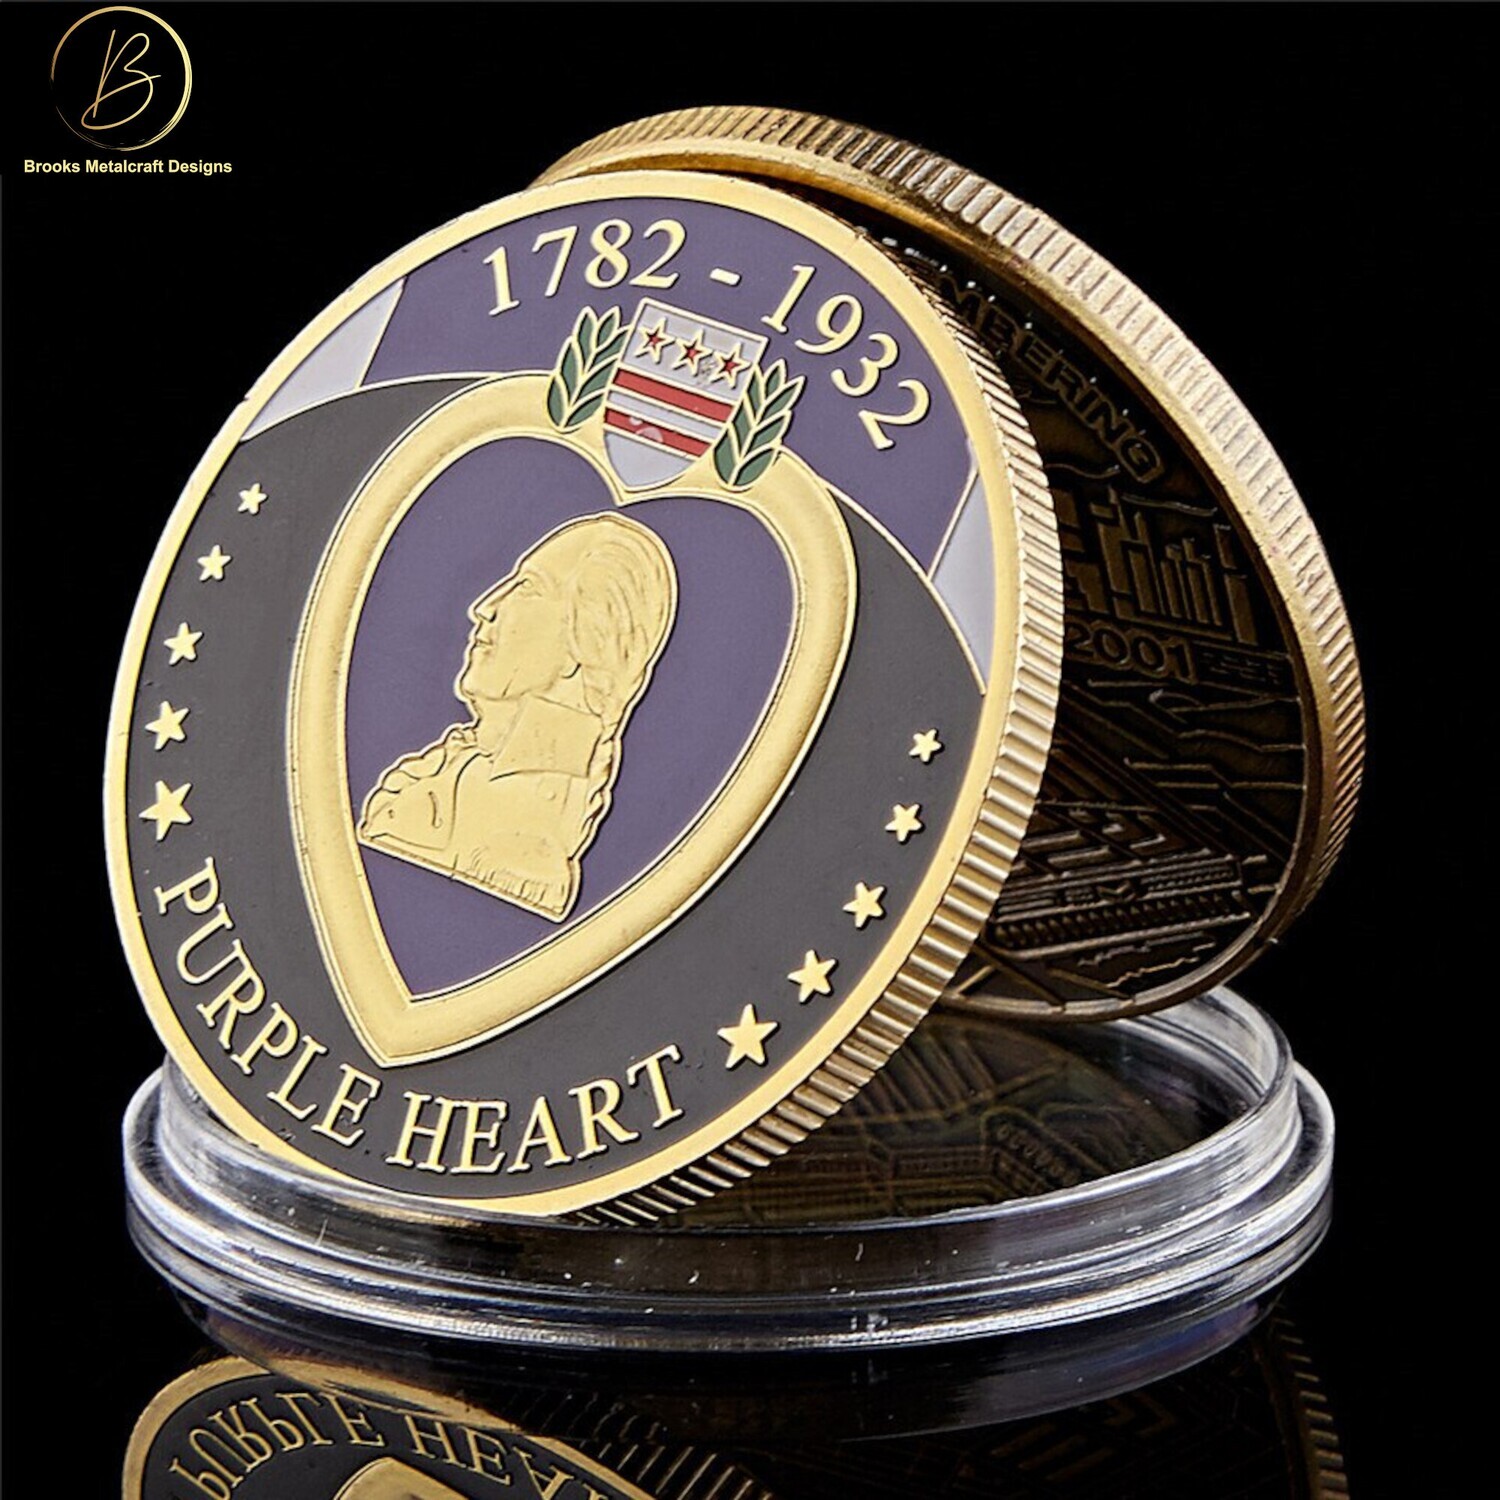 1782-1932 Purple Heart Challenge Coin